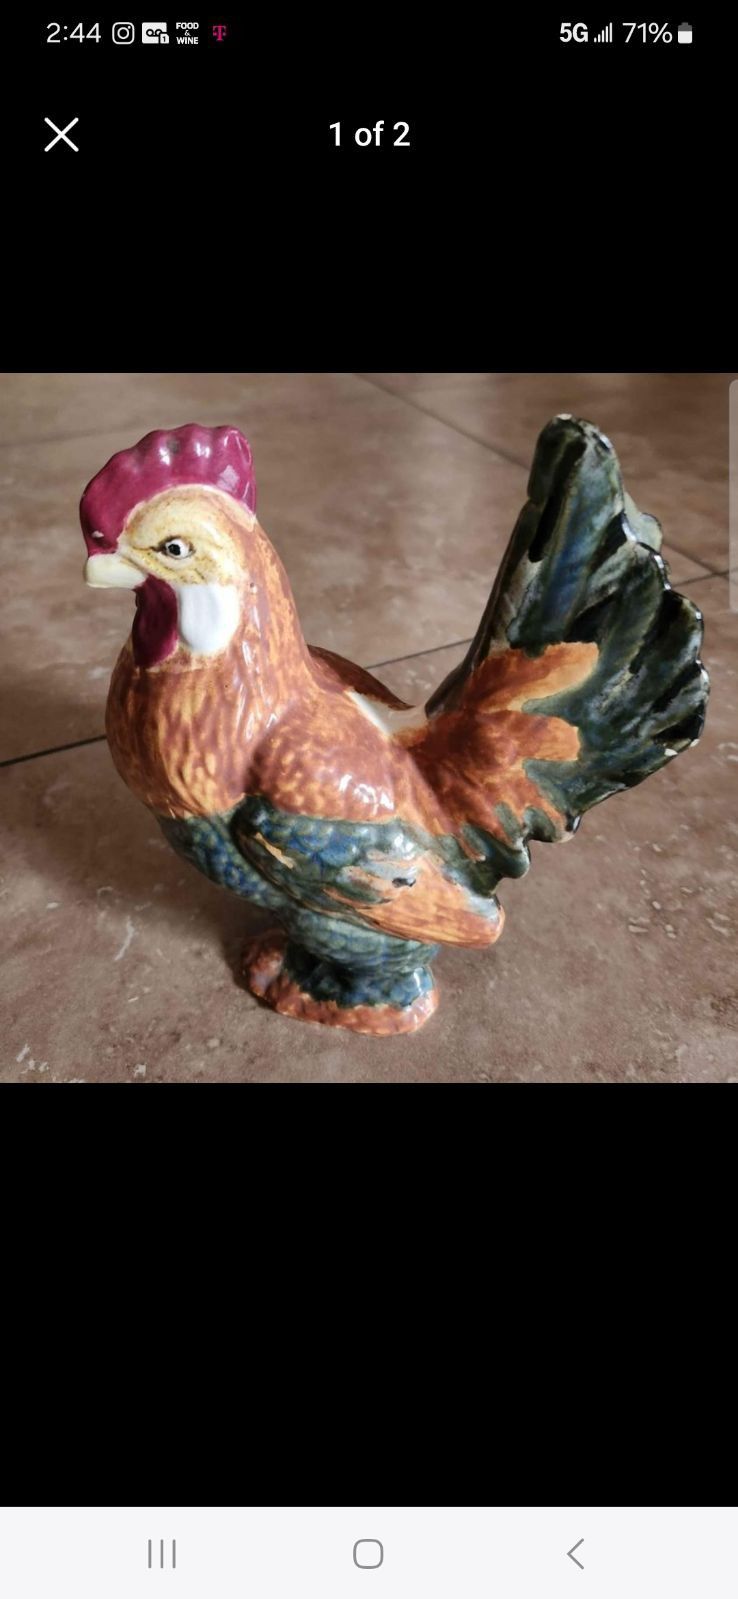 Rooster Figurine Ceramic